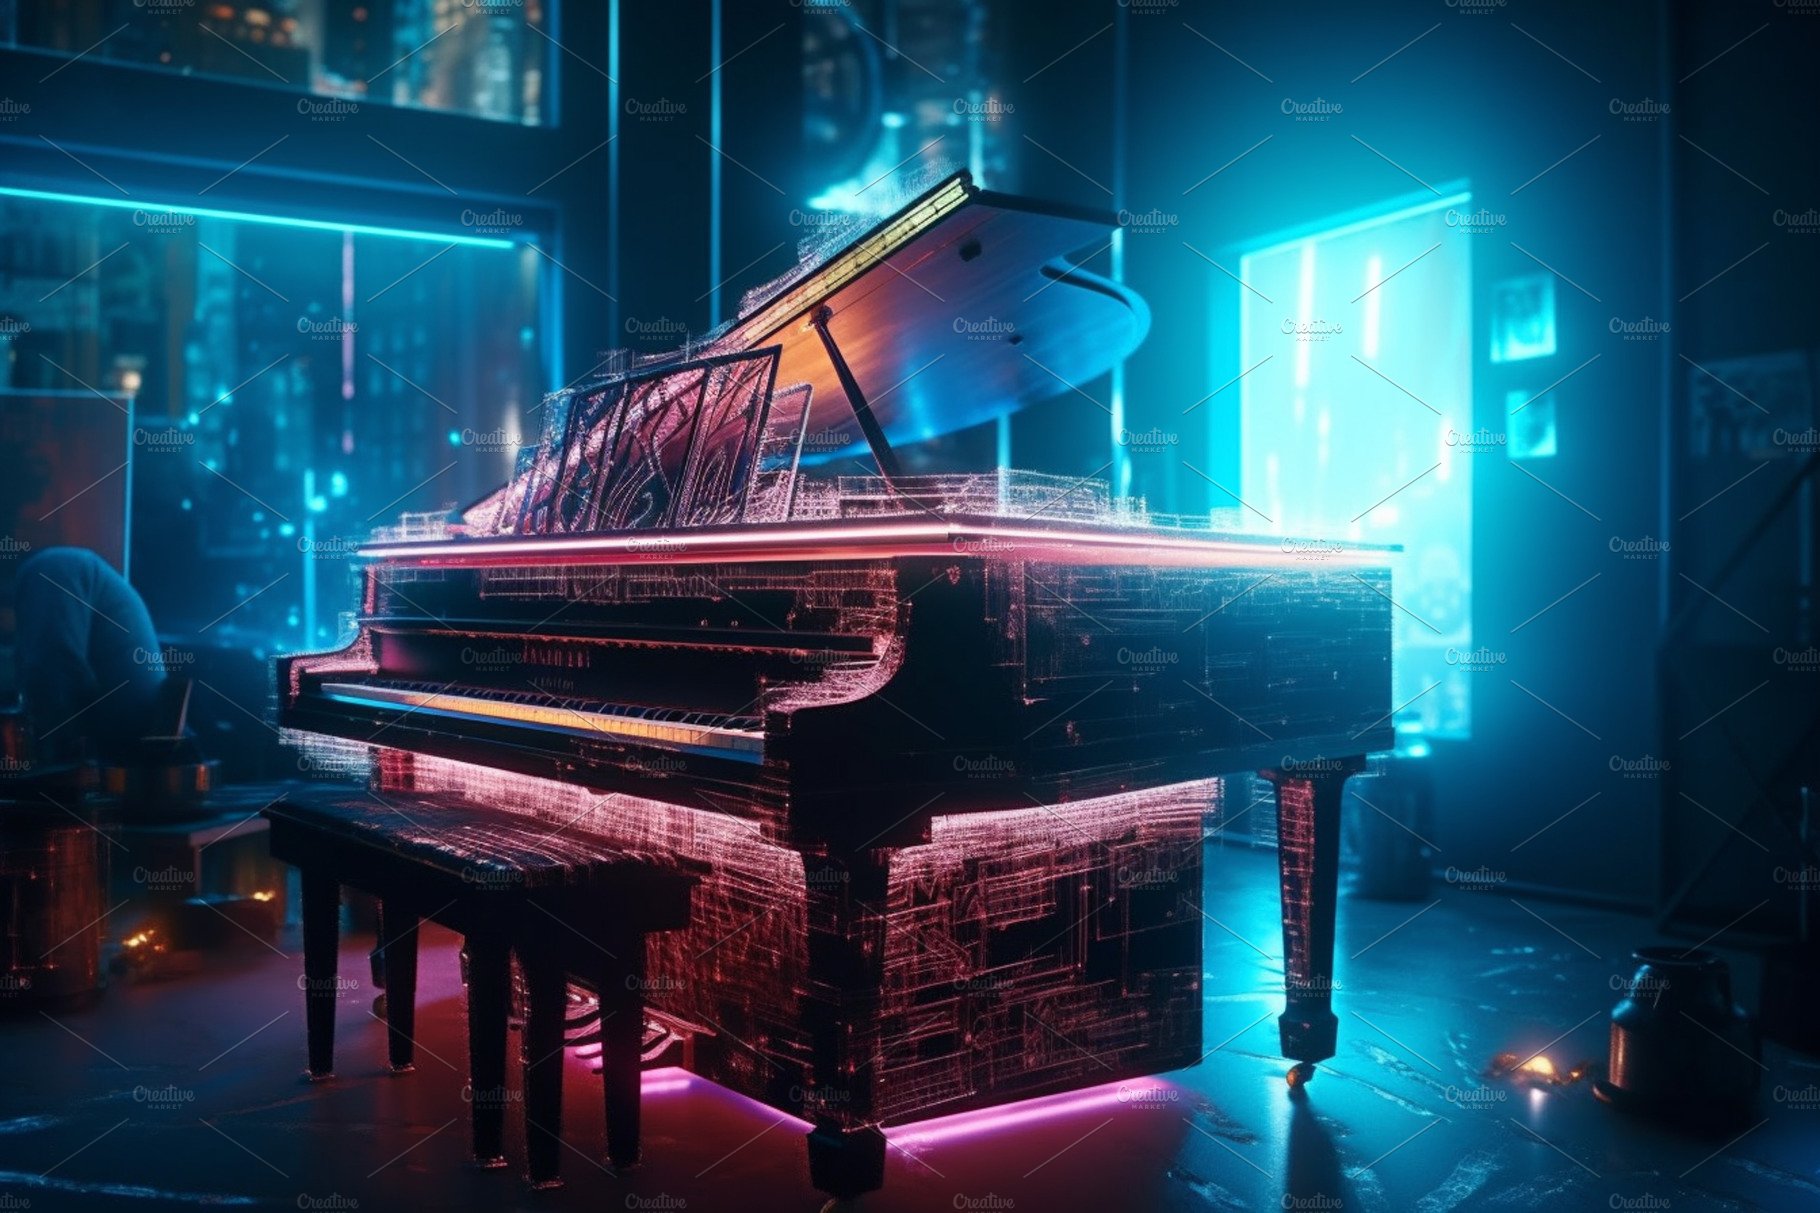 Piano standing in room with neon lights illumination futuristic interior. C... cover image.